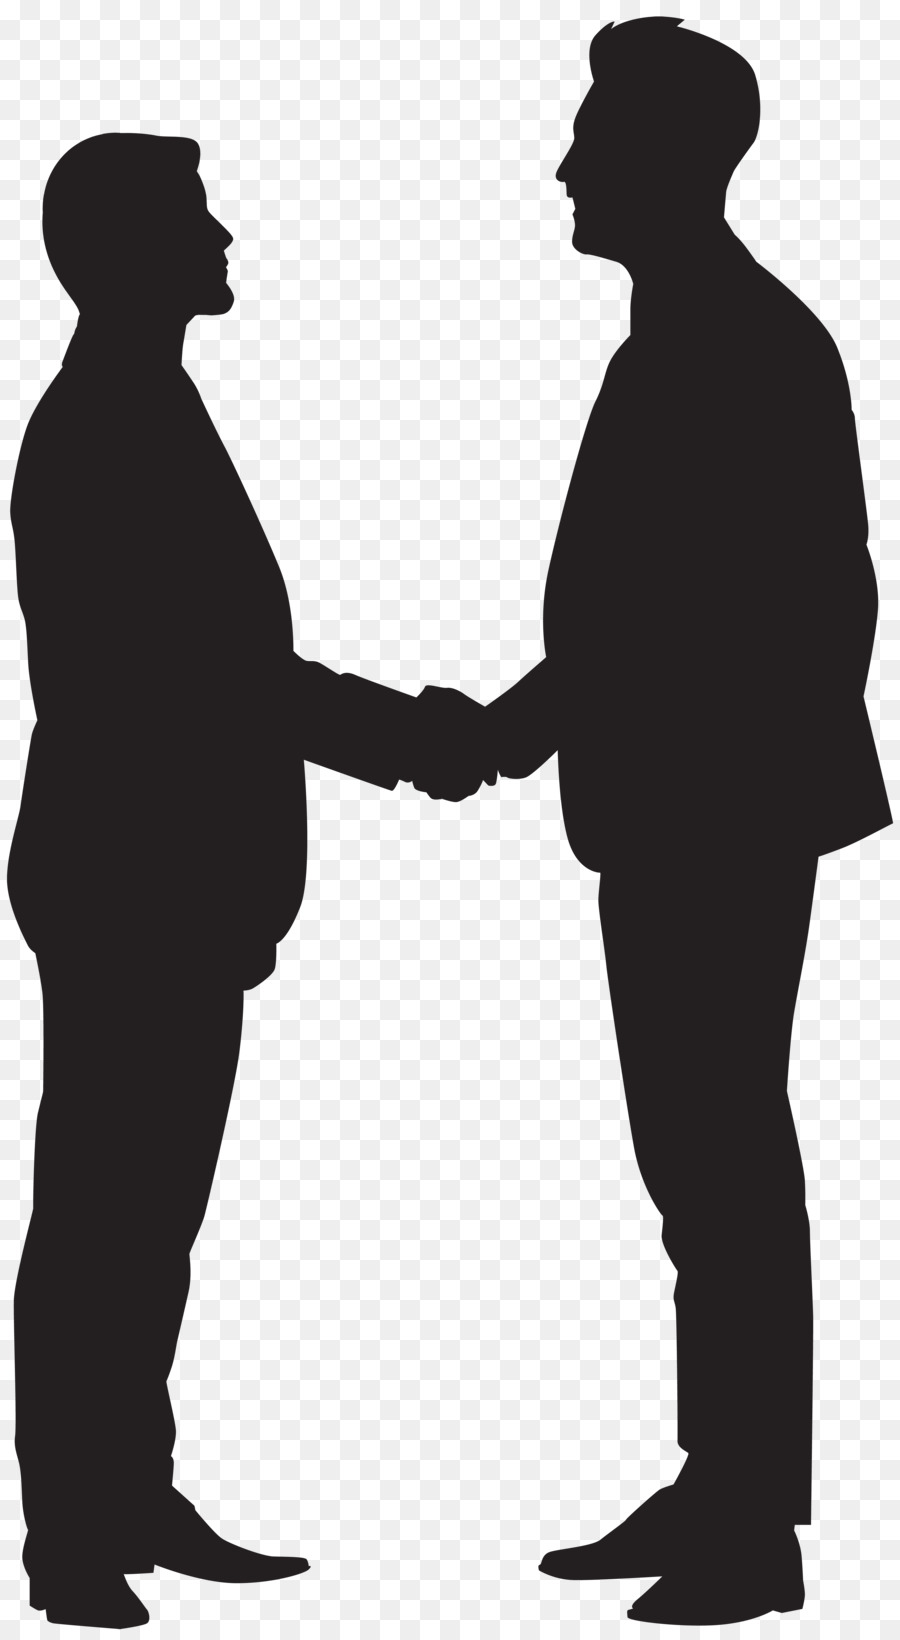 Handshake Silhouette Clip art - man silhouette png download - 4395*8000 - Free Transparent Handshake png Download.